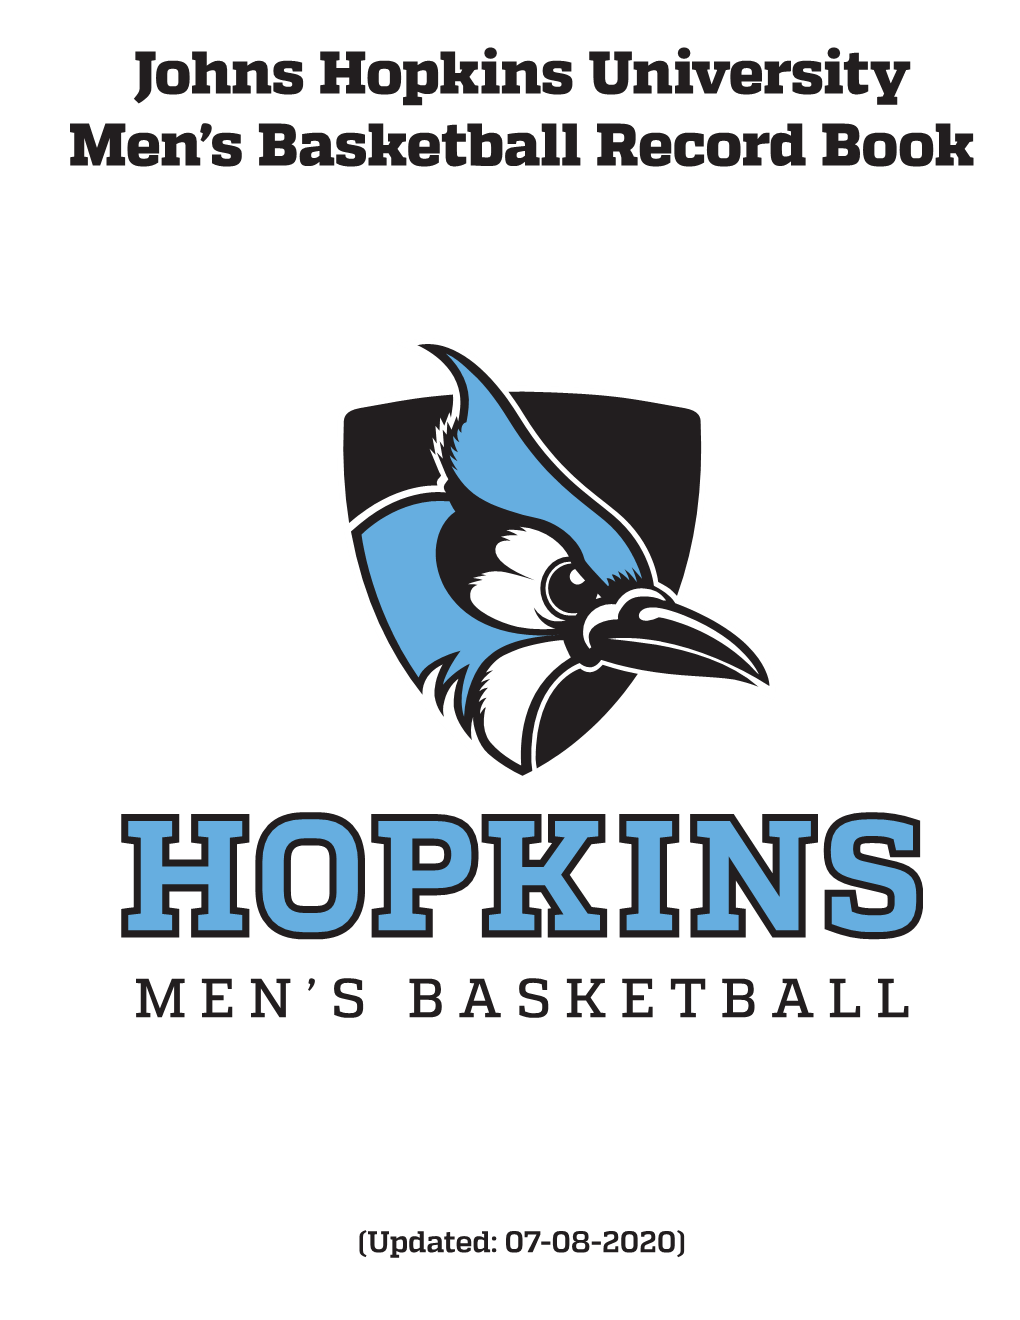 Johns Hopkins University Men's Basketball Record Book